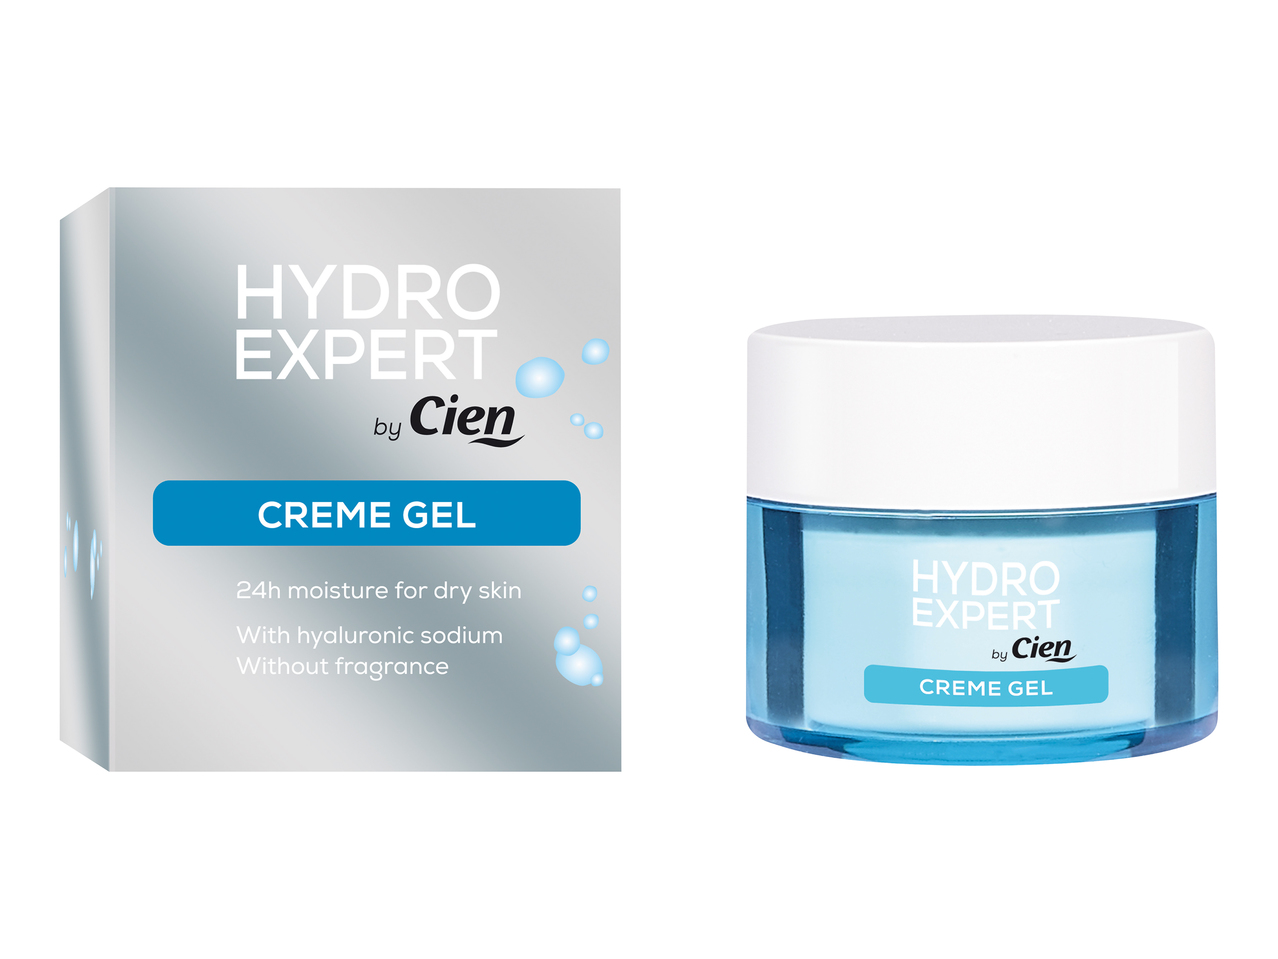 Hydro Creme Gel